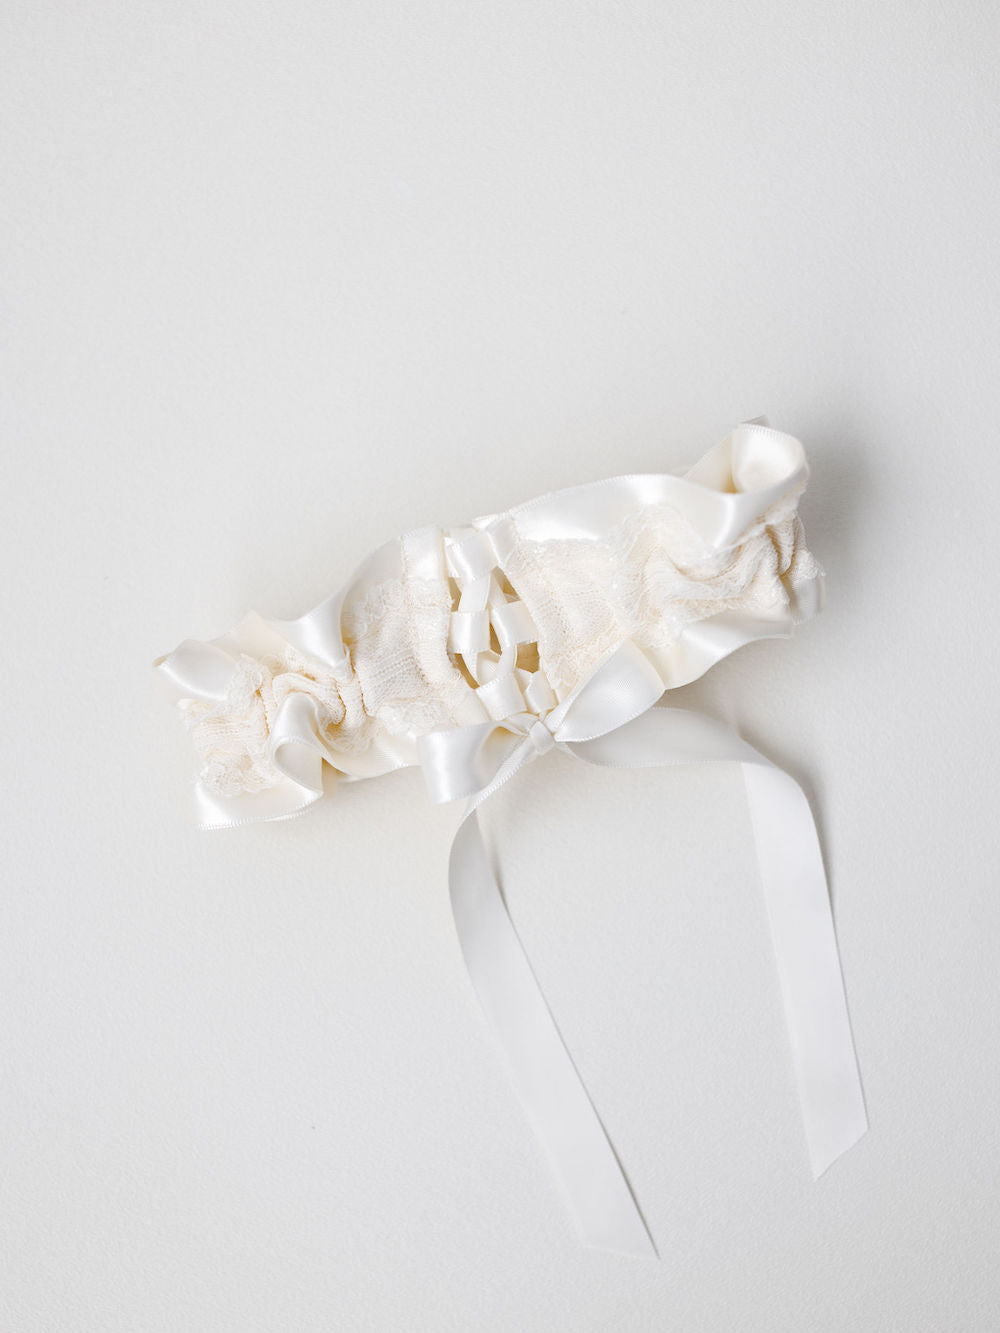 adjustable ivory lace wedding garter with corset tie handmade by The Garter Girl